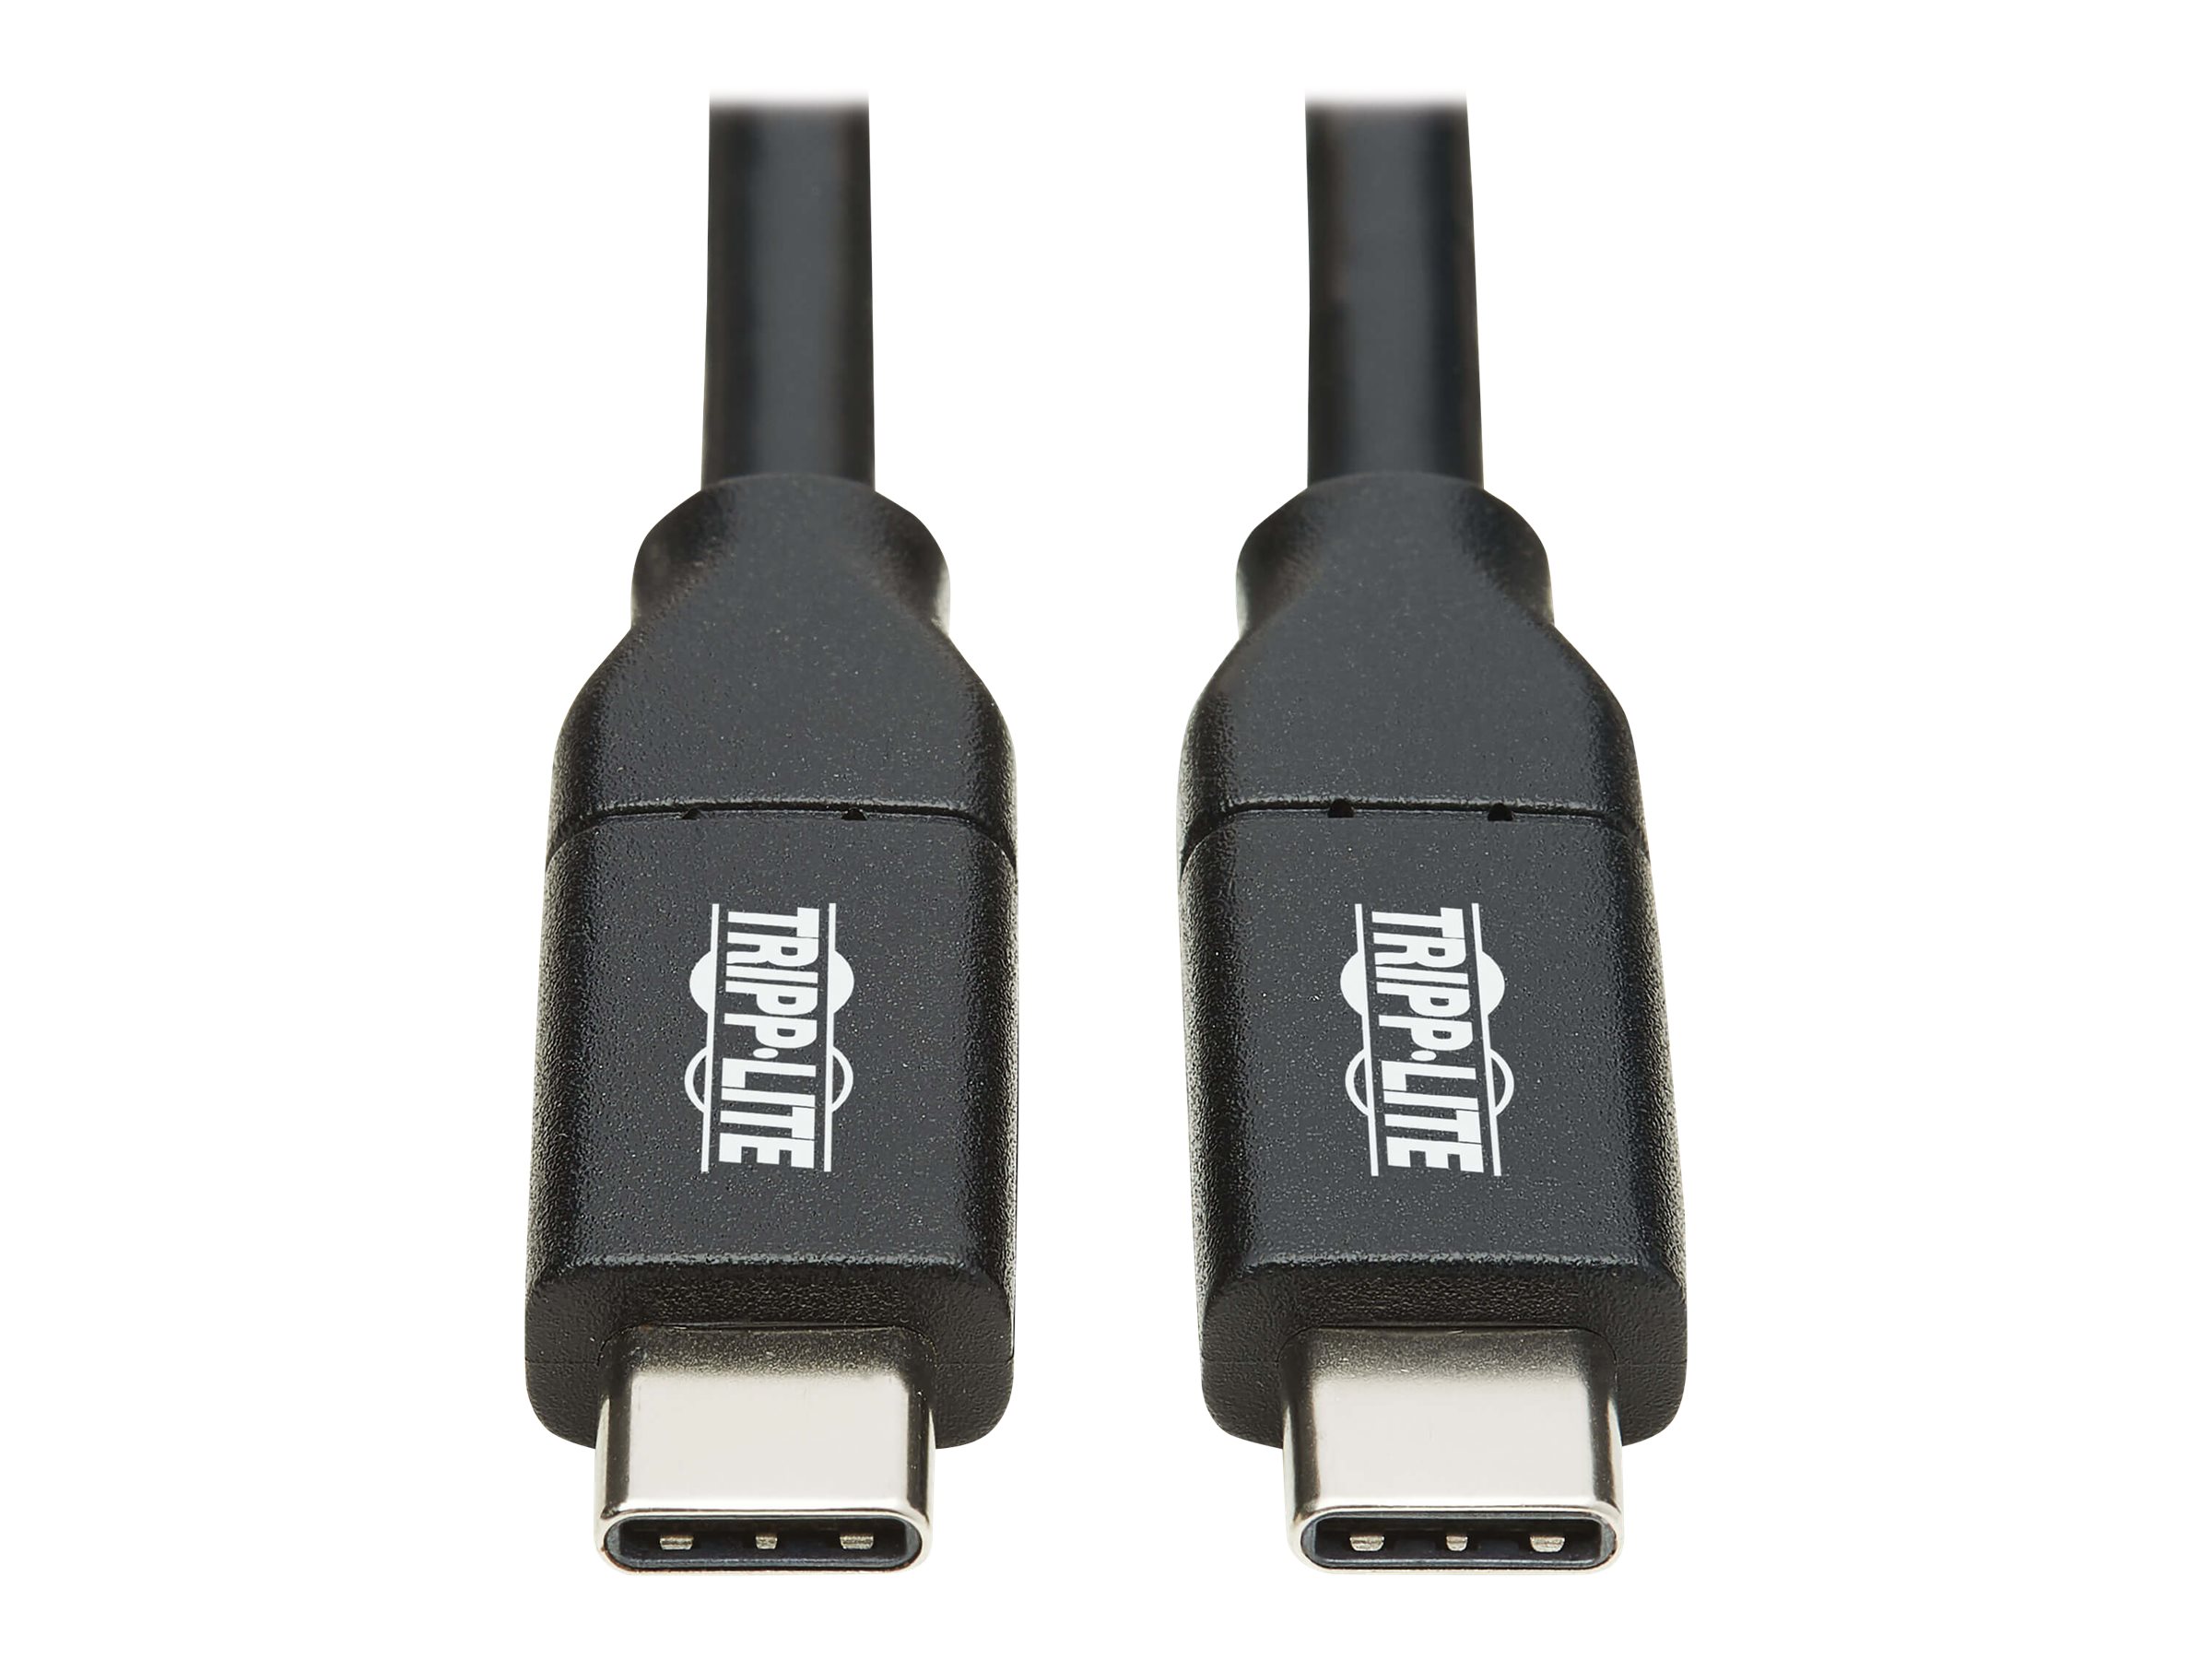 Tripp Lite USB Type C to USB C Cable USB 2.0 5A Rating USB-I